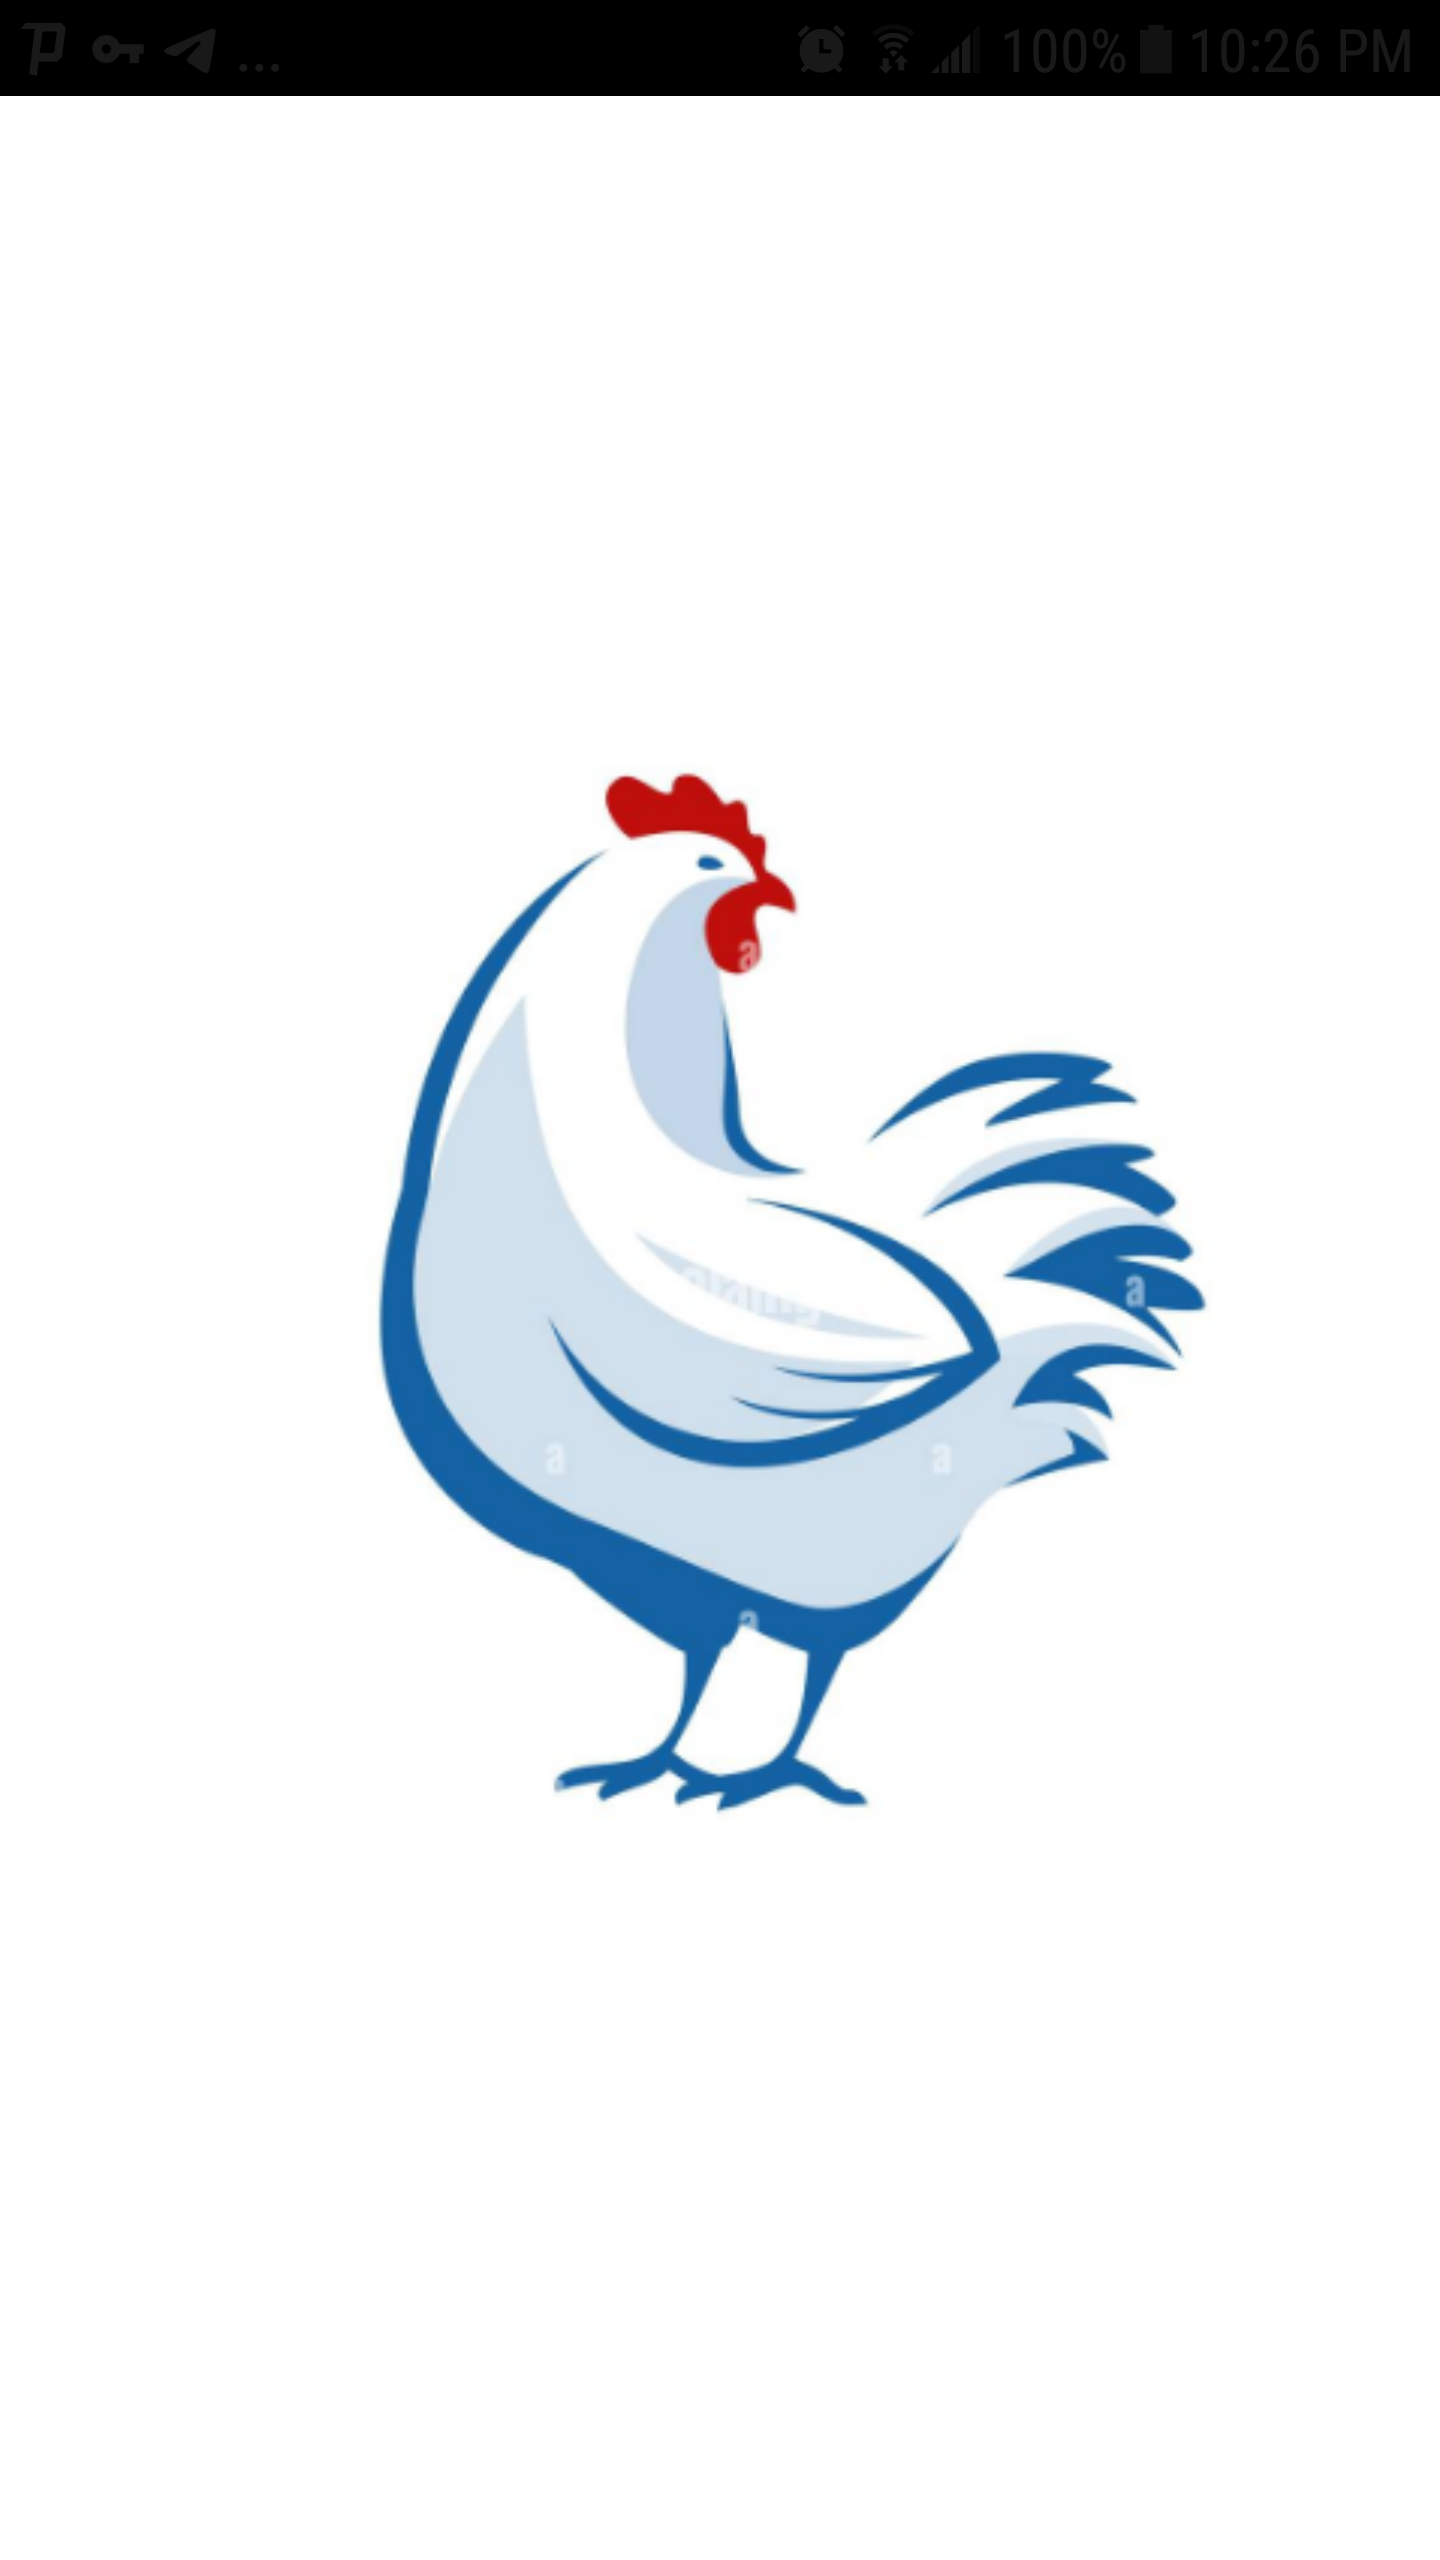 Automatic Chicken Feeder App using Flutter